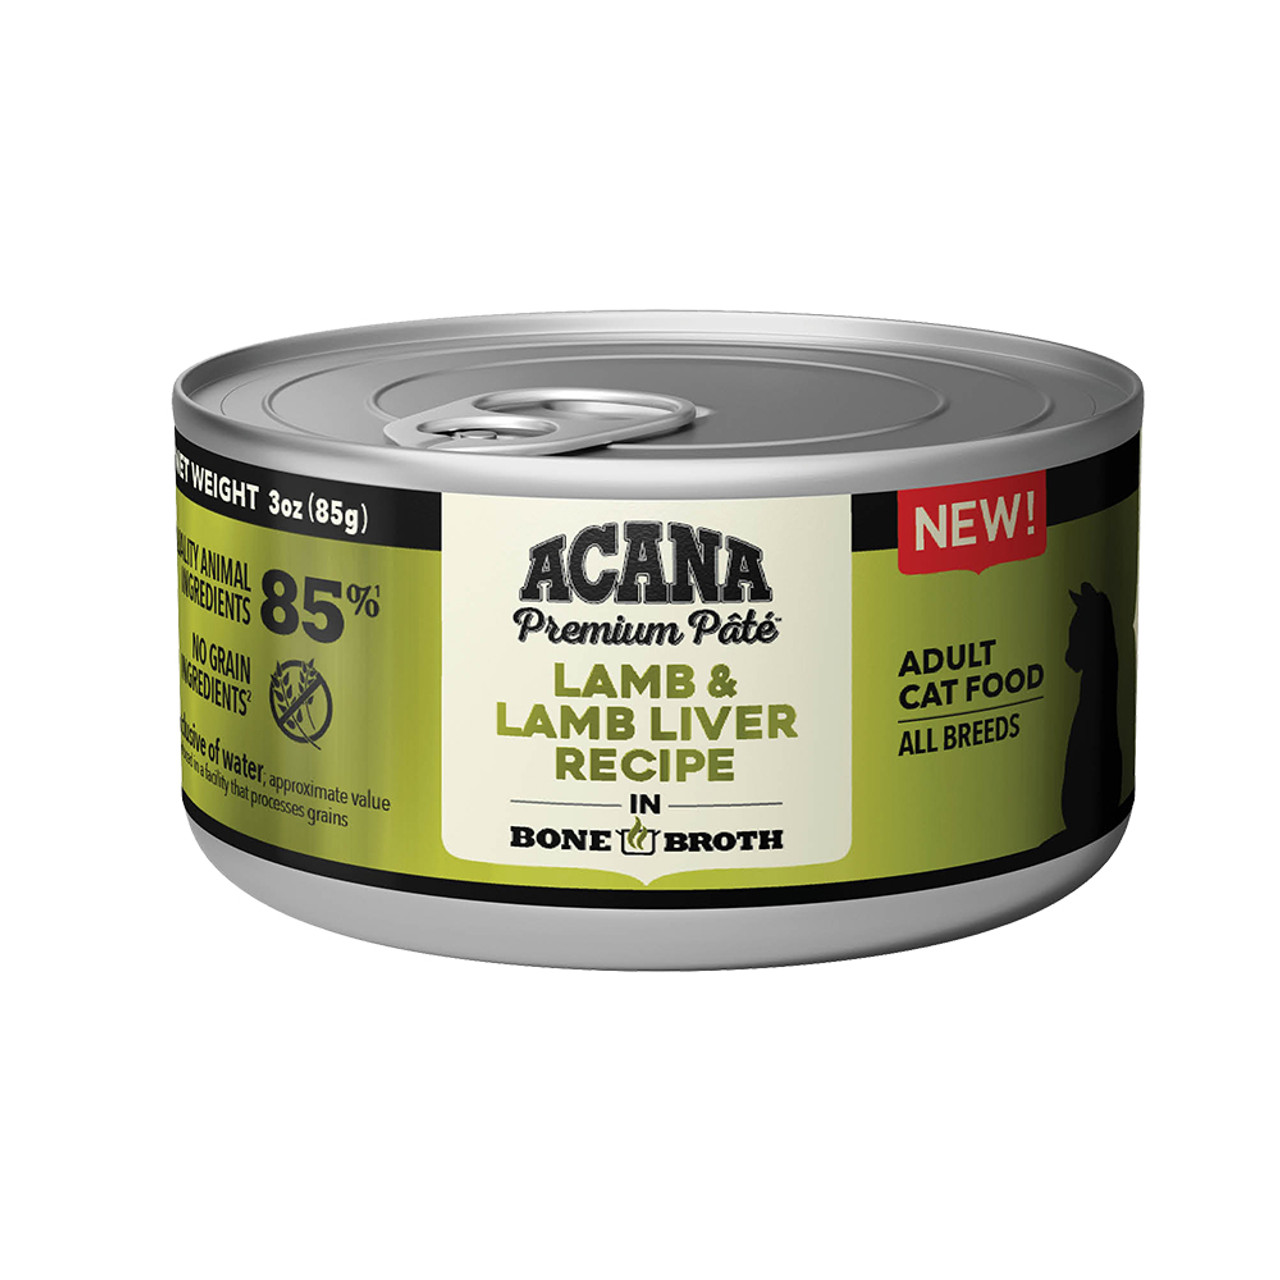 Acana Premium Pate Lamb & Lamb Liver Recipe In Bone Broth Canned Cat Food - Front